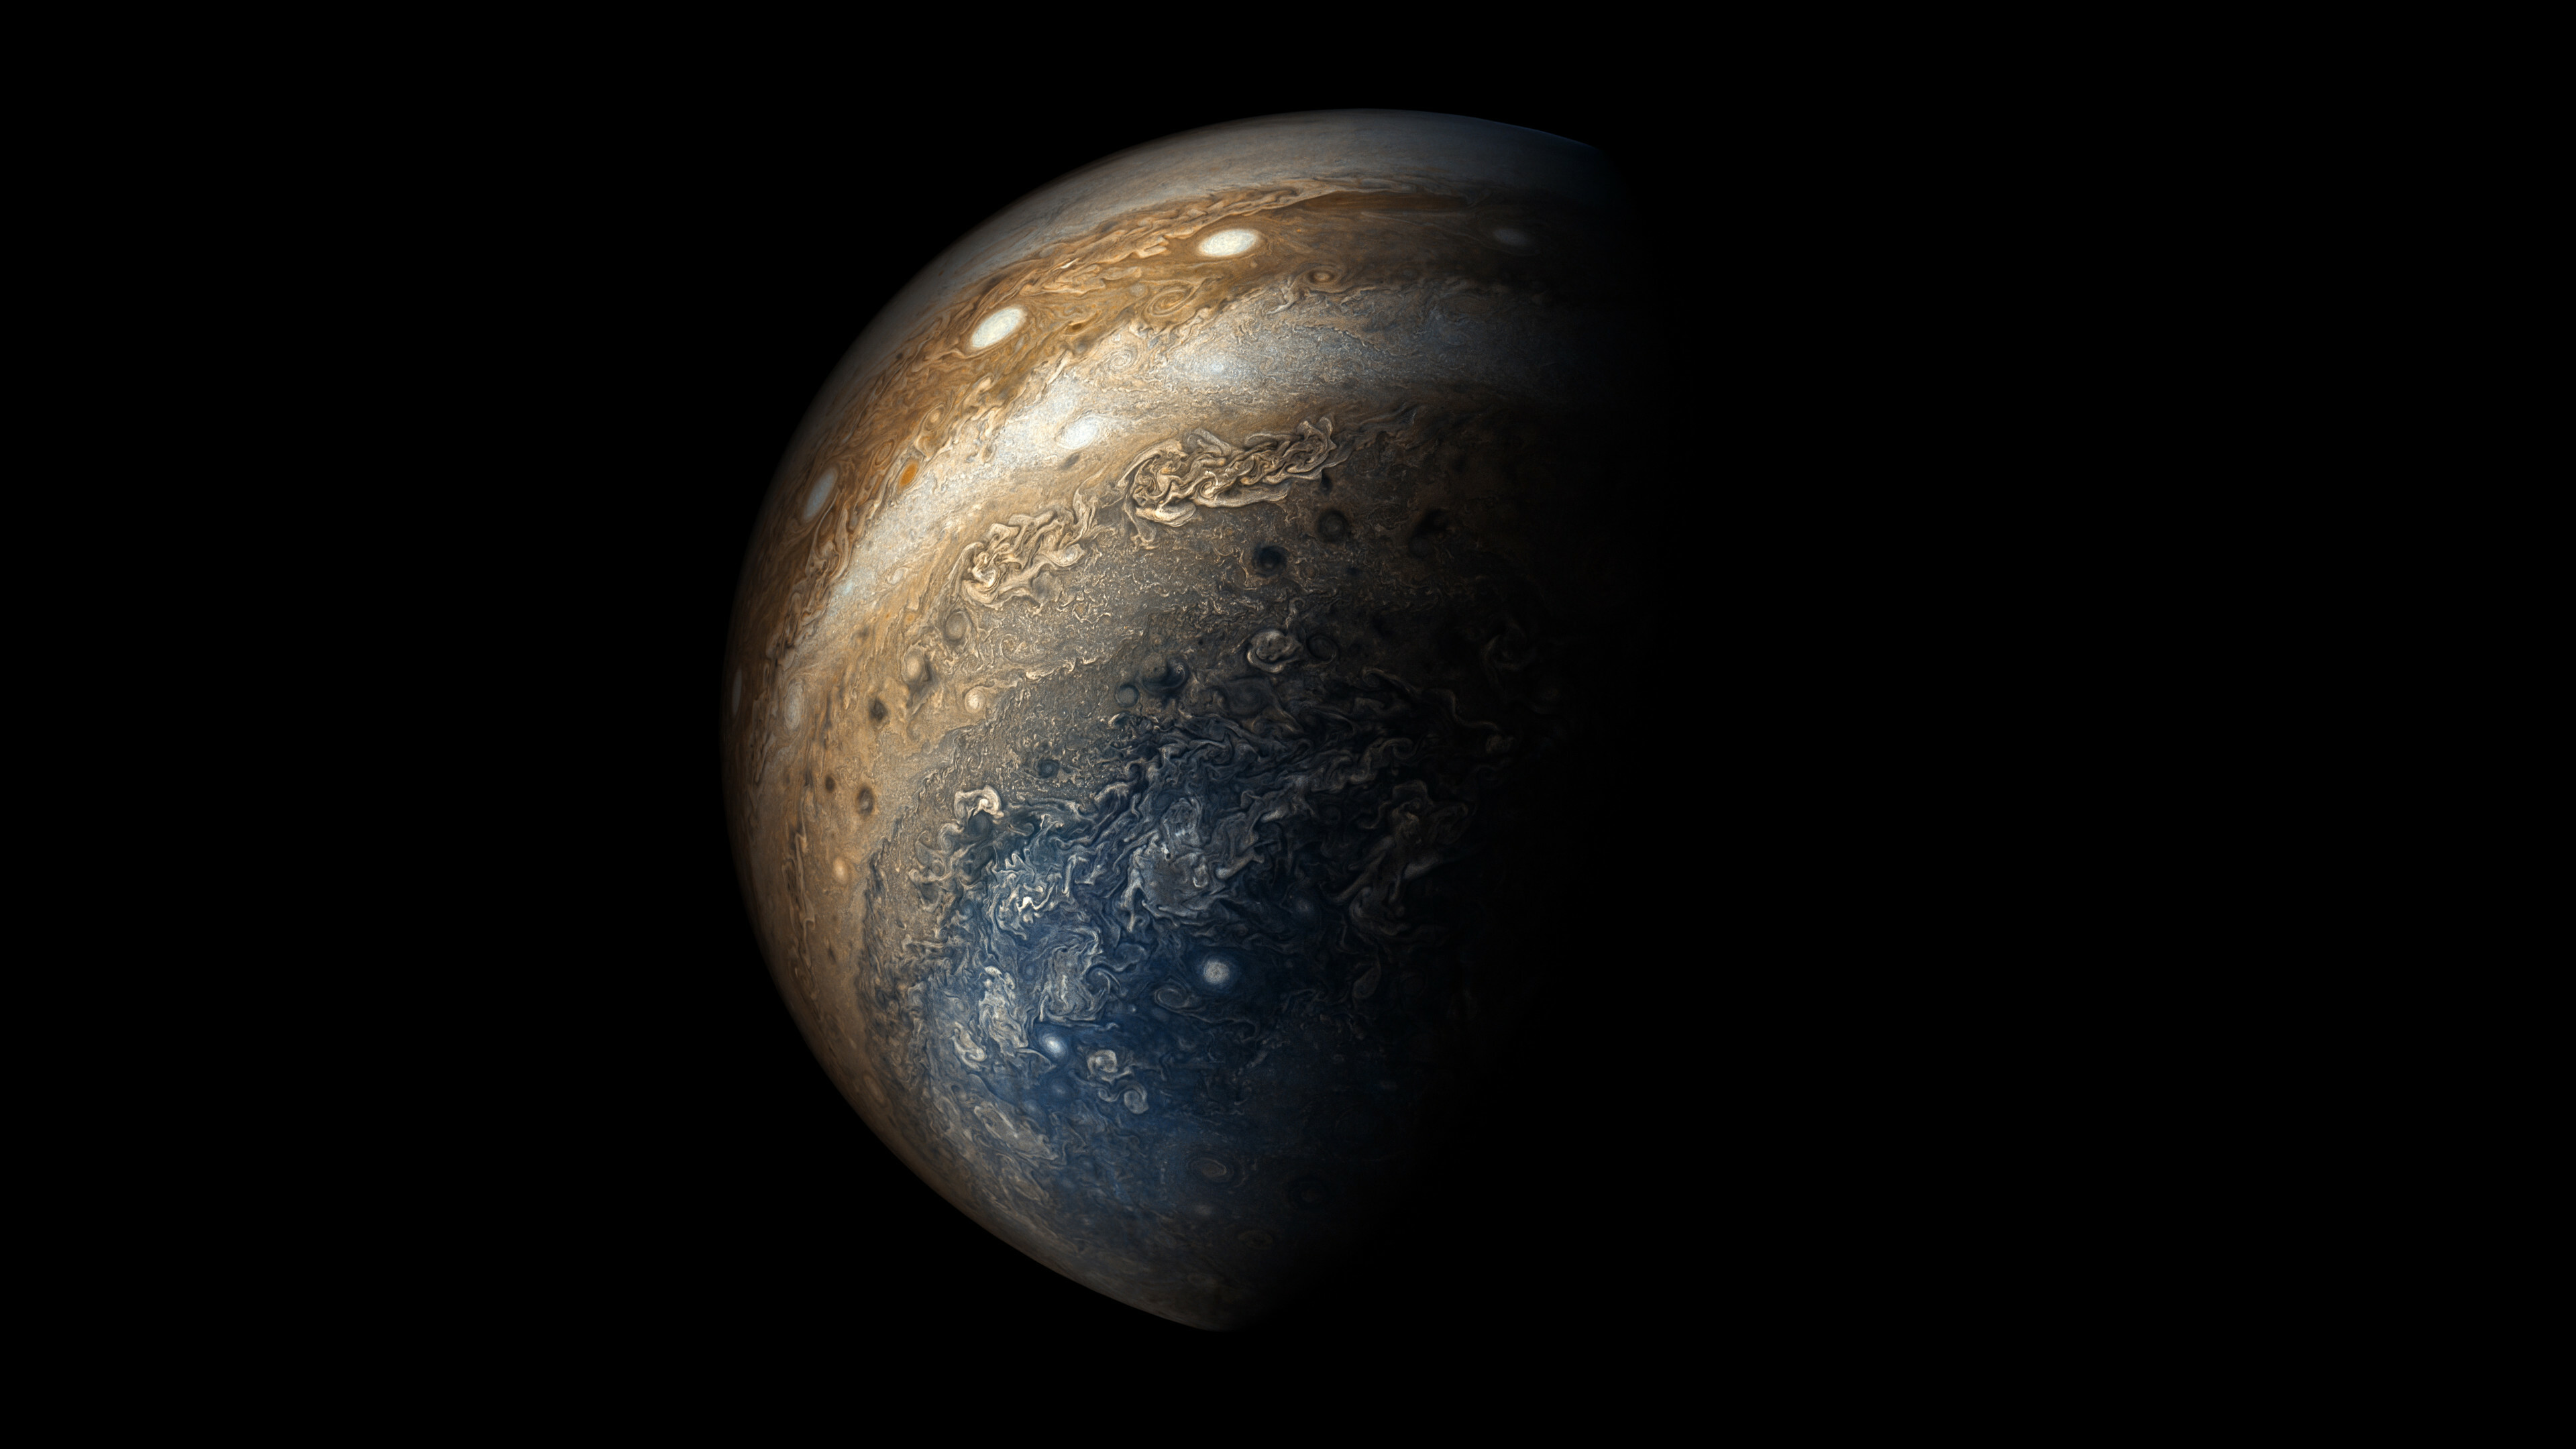 Jupiter's grandeur, Beautiful planet, 4K UHD wallpaper, Space's majesty, 3840x2160 4K Desktop